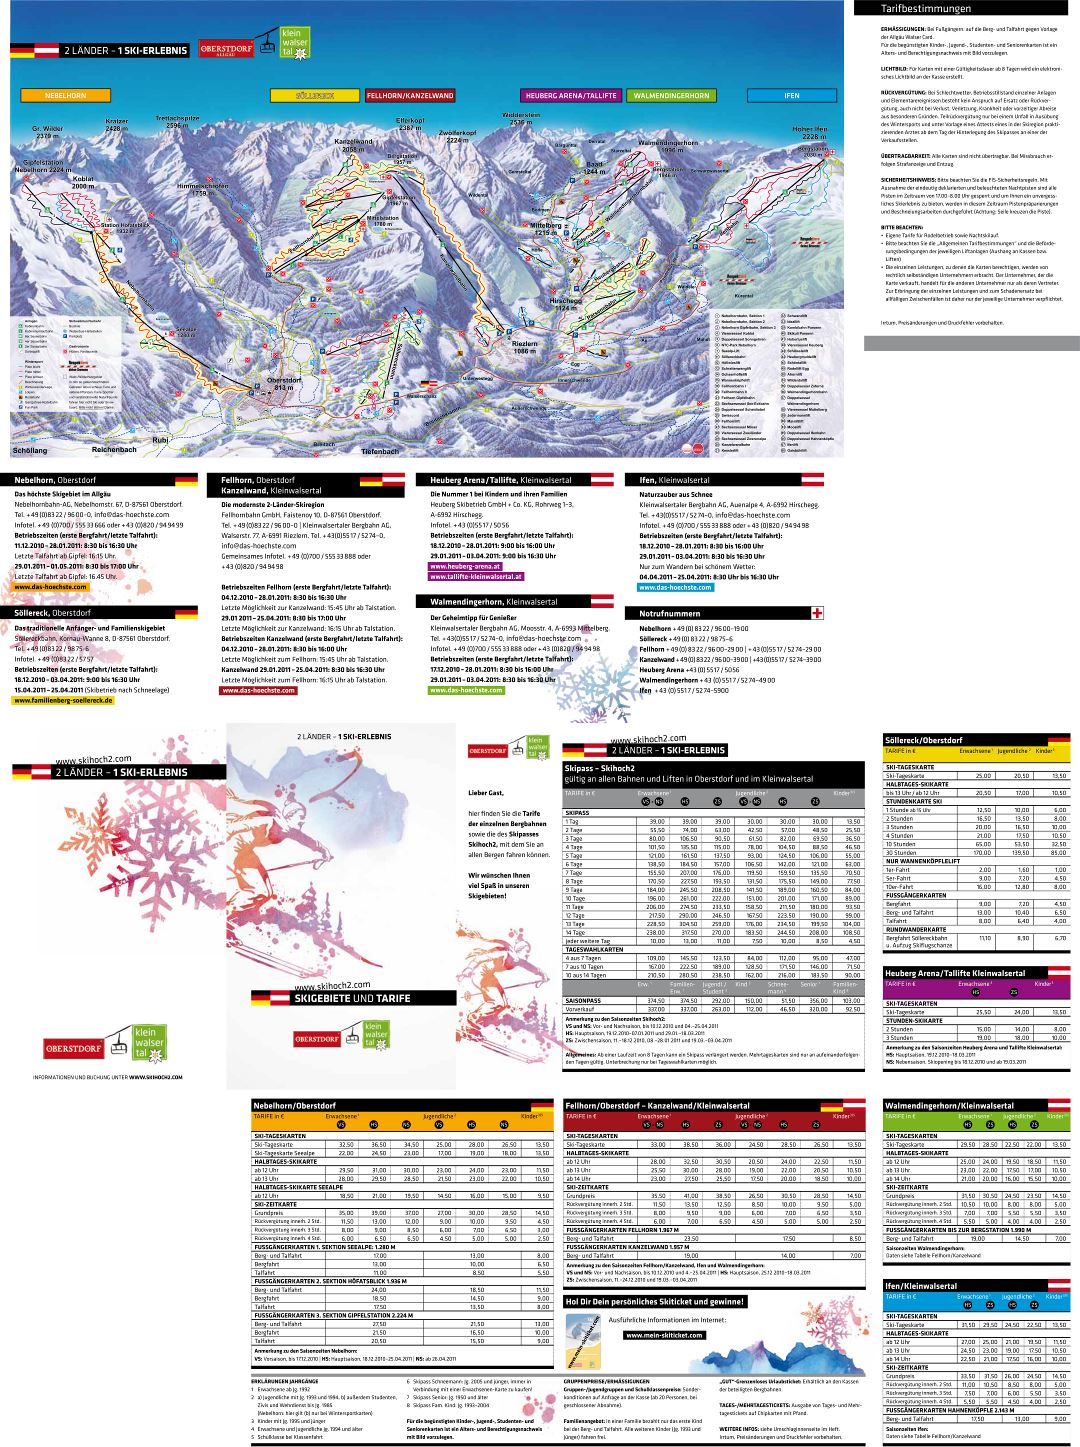 Large scale piste map and guide of Kleinwalsertal - Oberstdorf Ski Resort - 2010